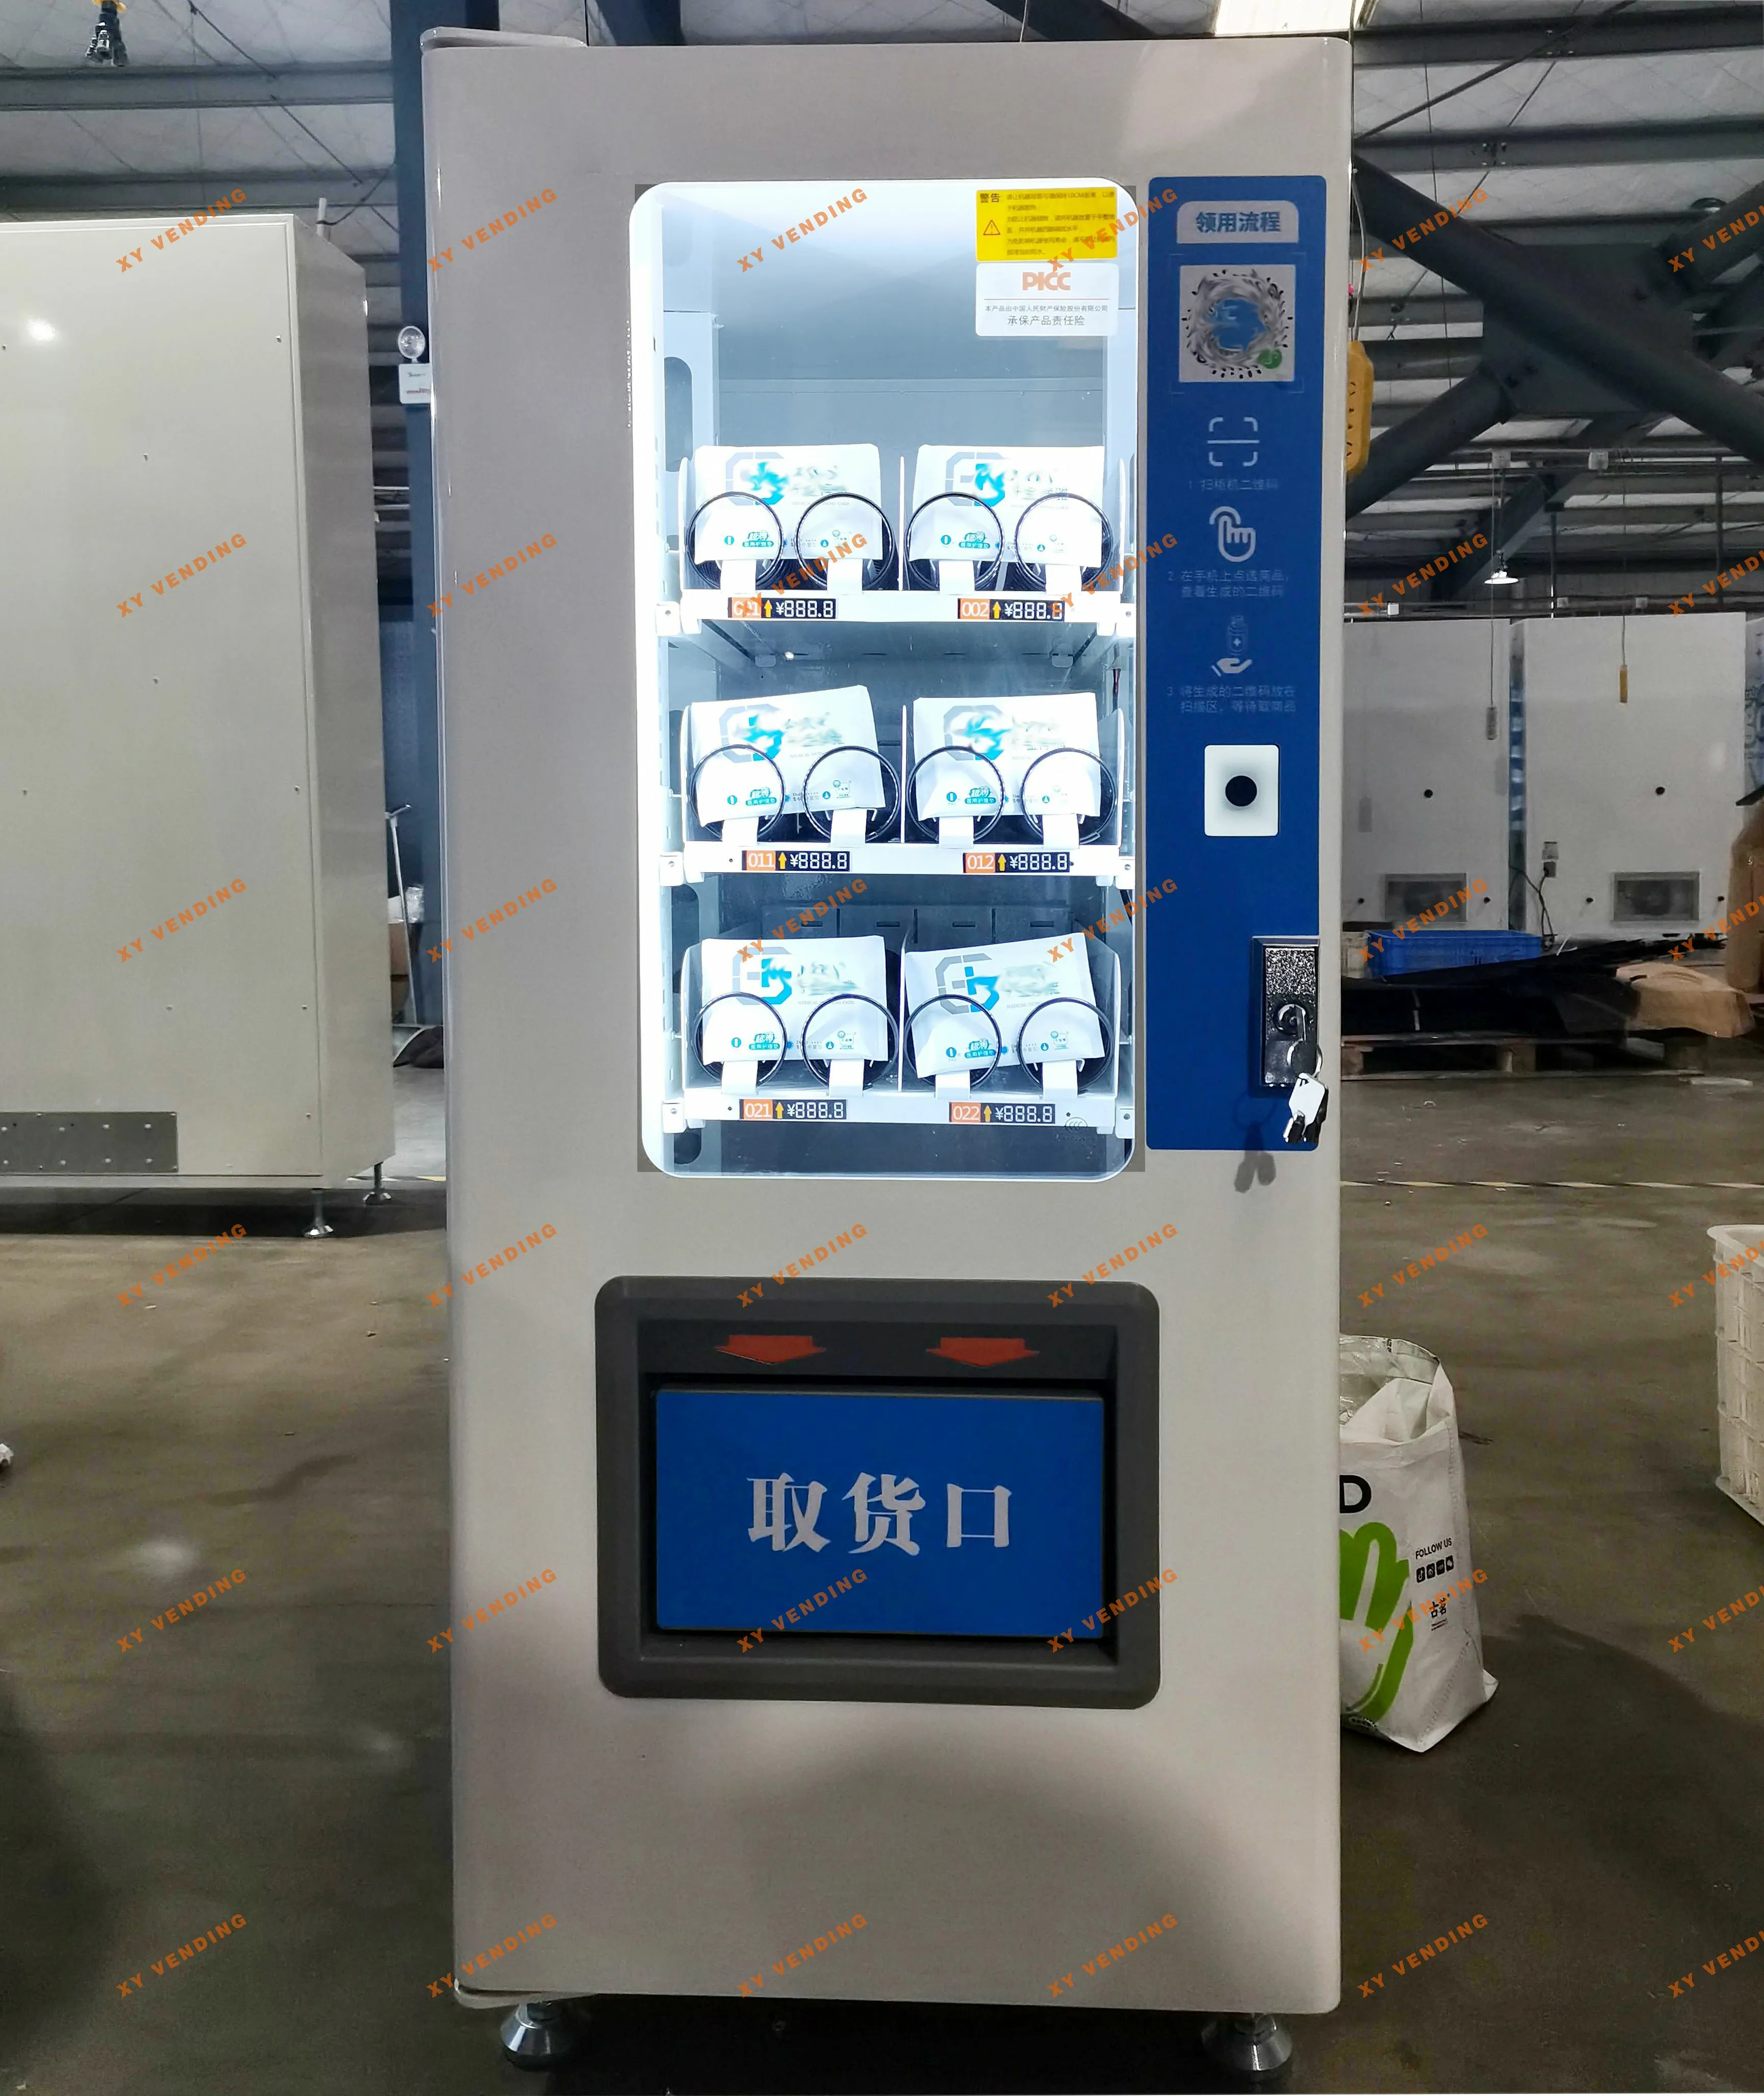 XY Vending machine——Hygiene products vending machine~